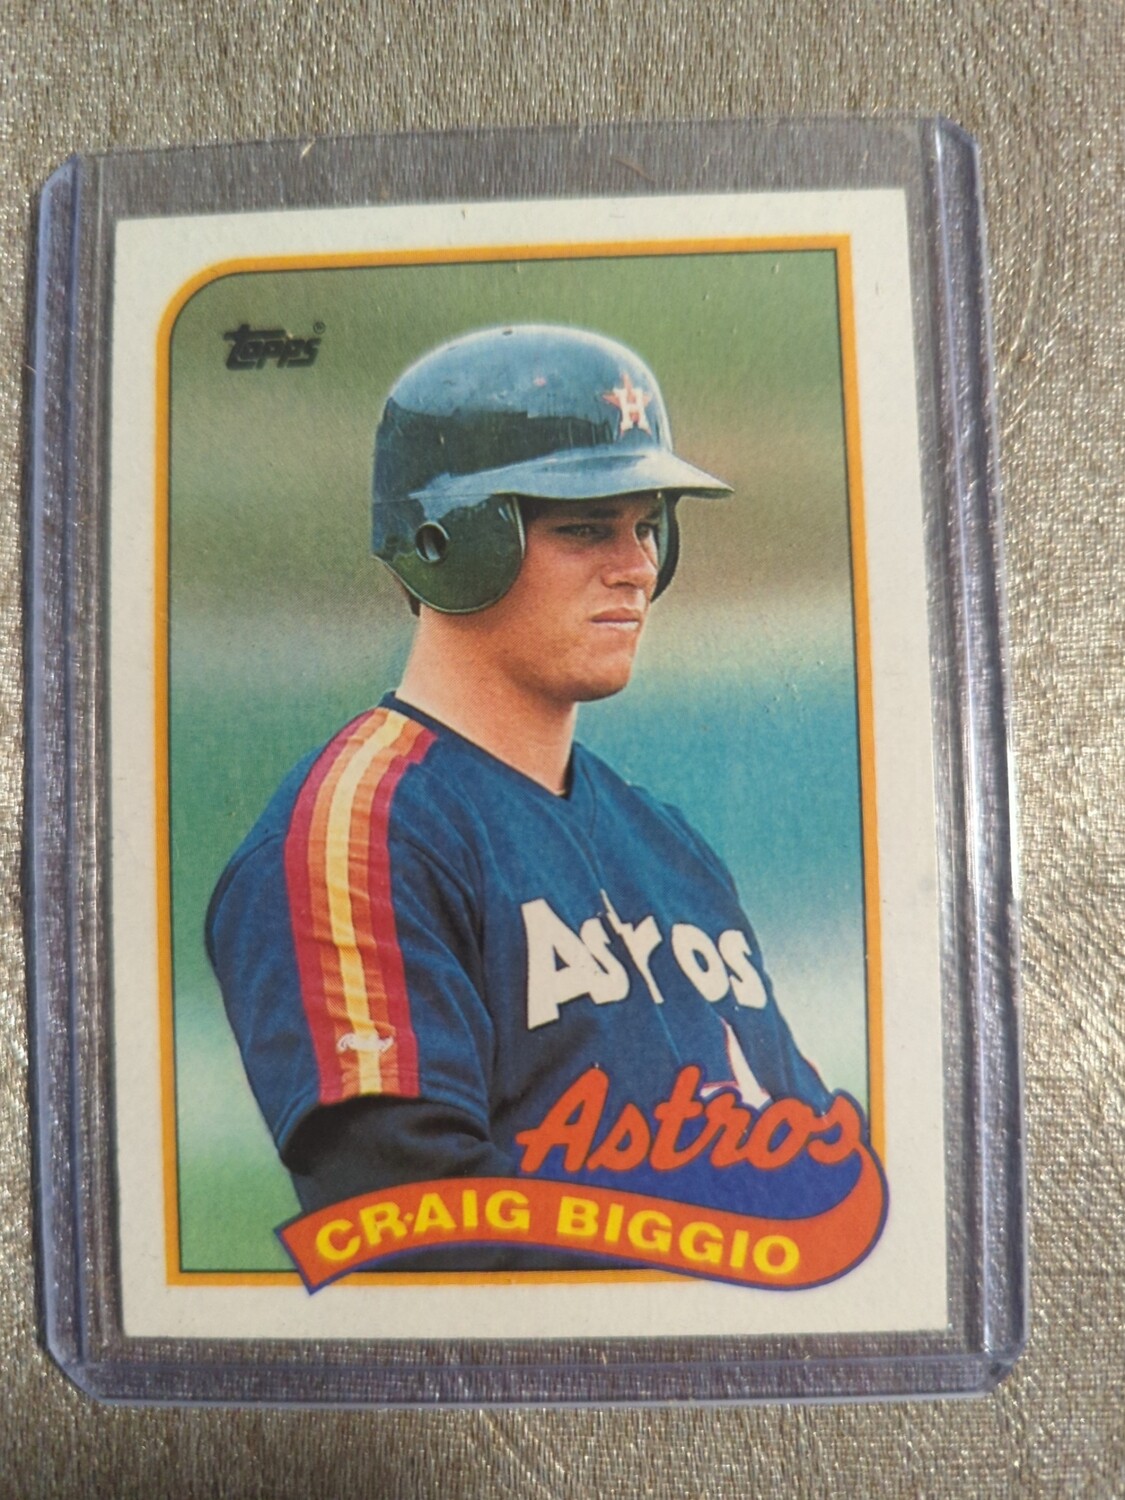 Craig biggio of the Astros 1989 Topps baseball card